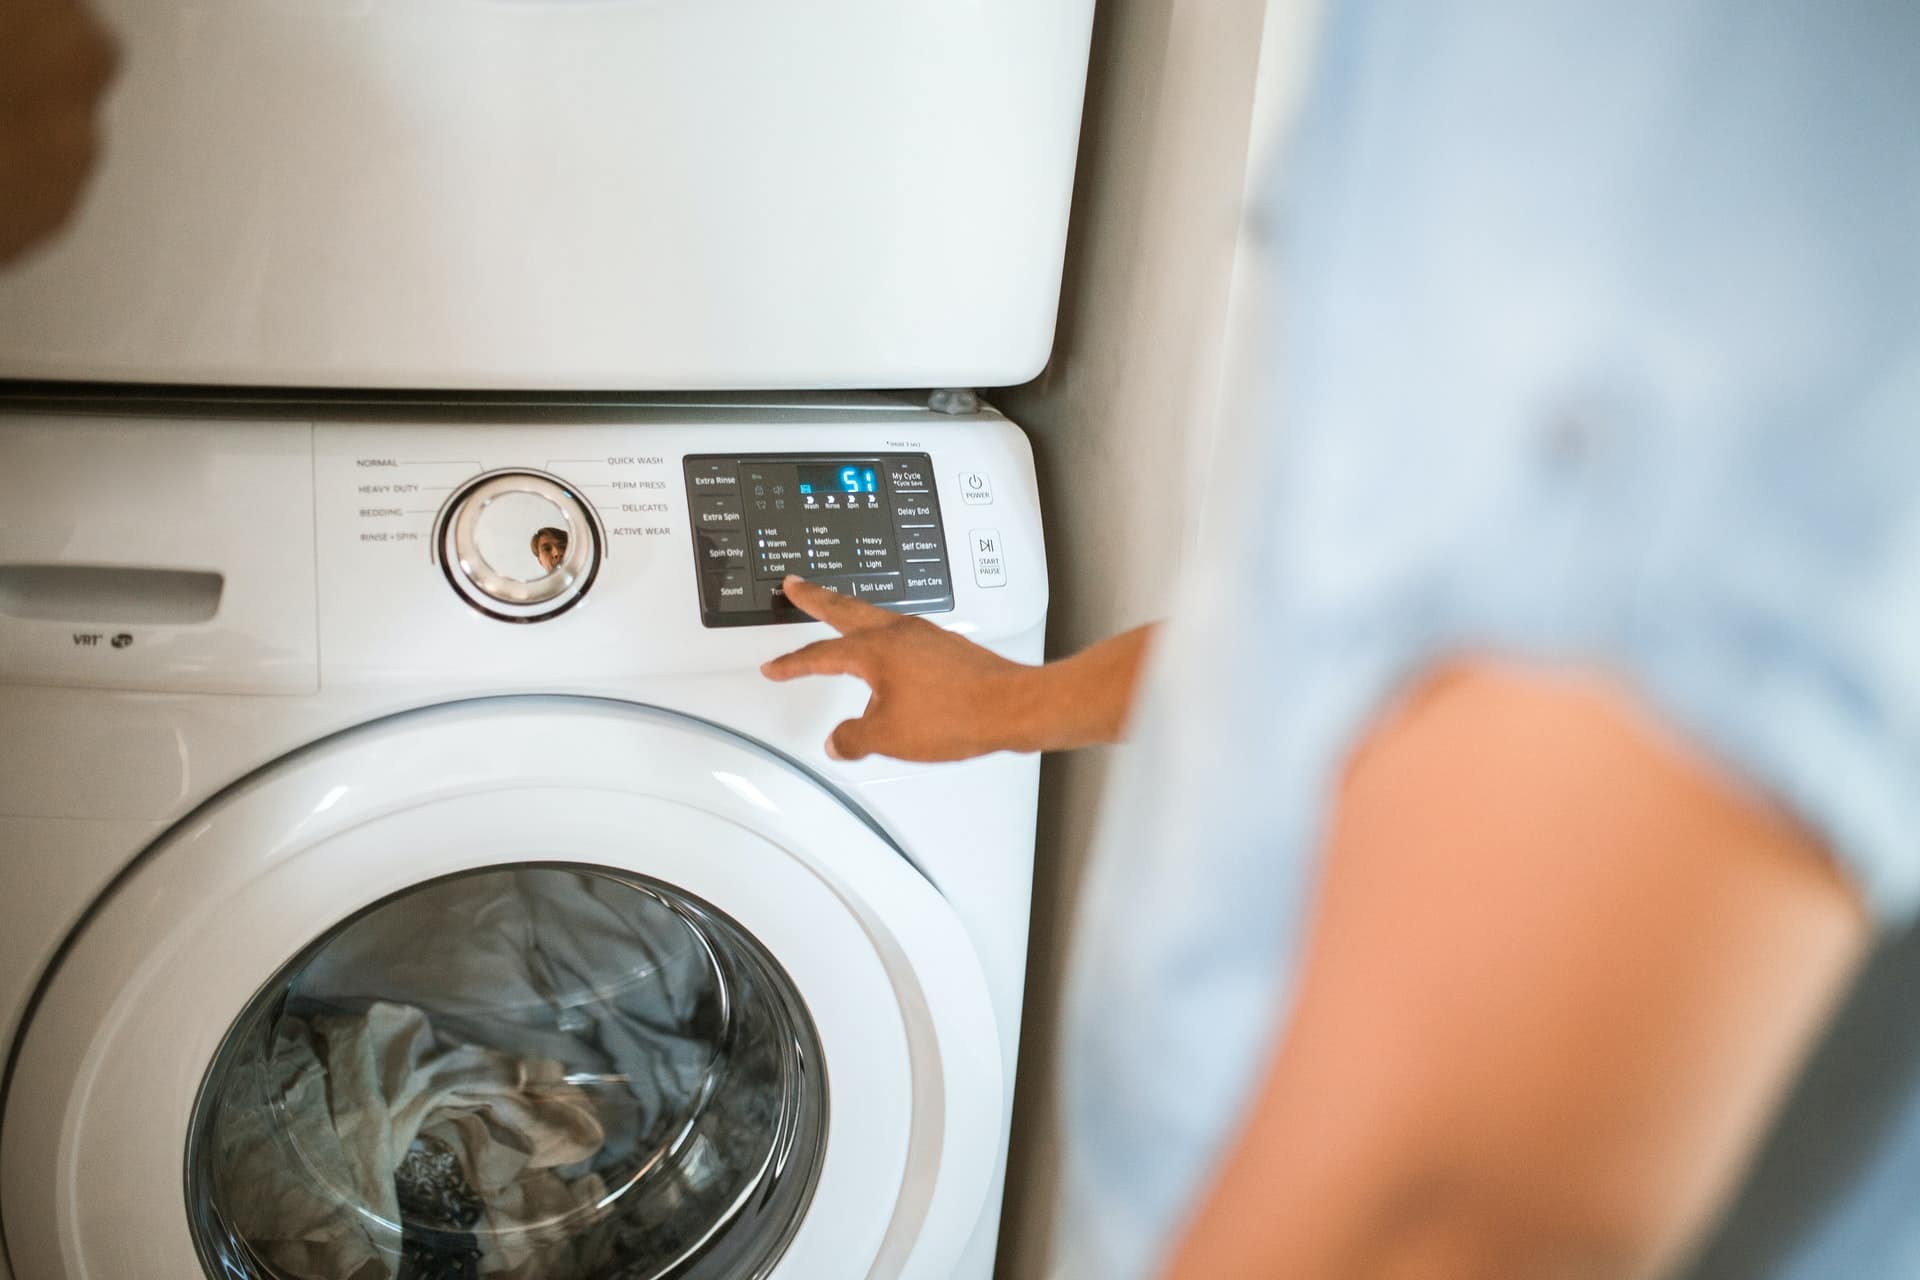 New LG Washing Machine Making Noise When Spinning